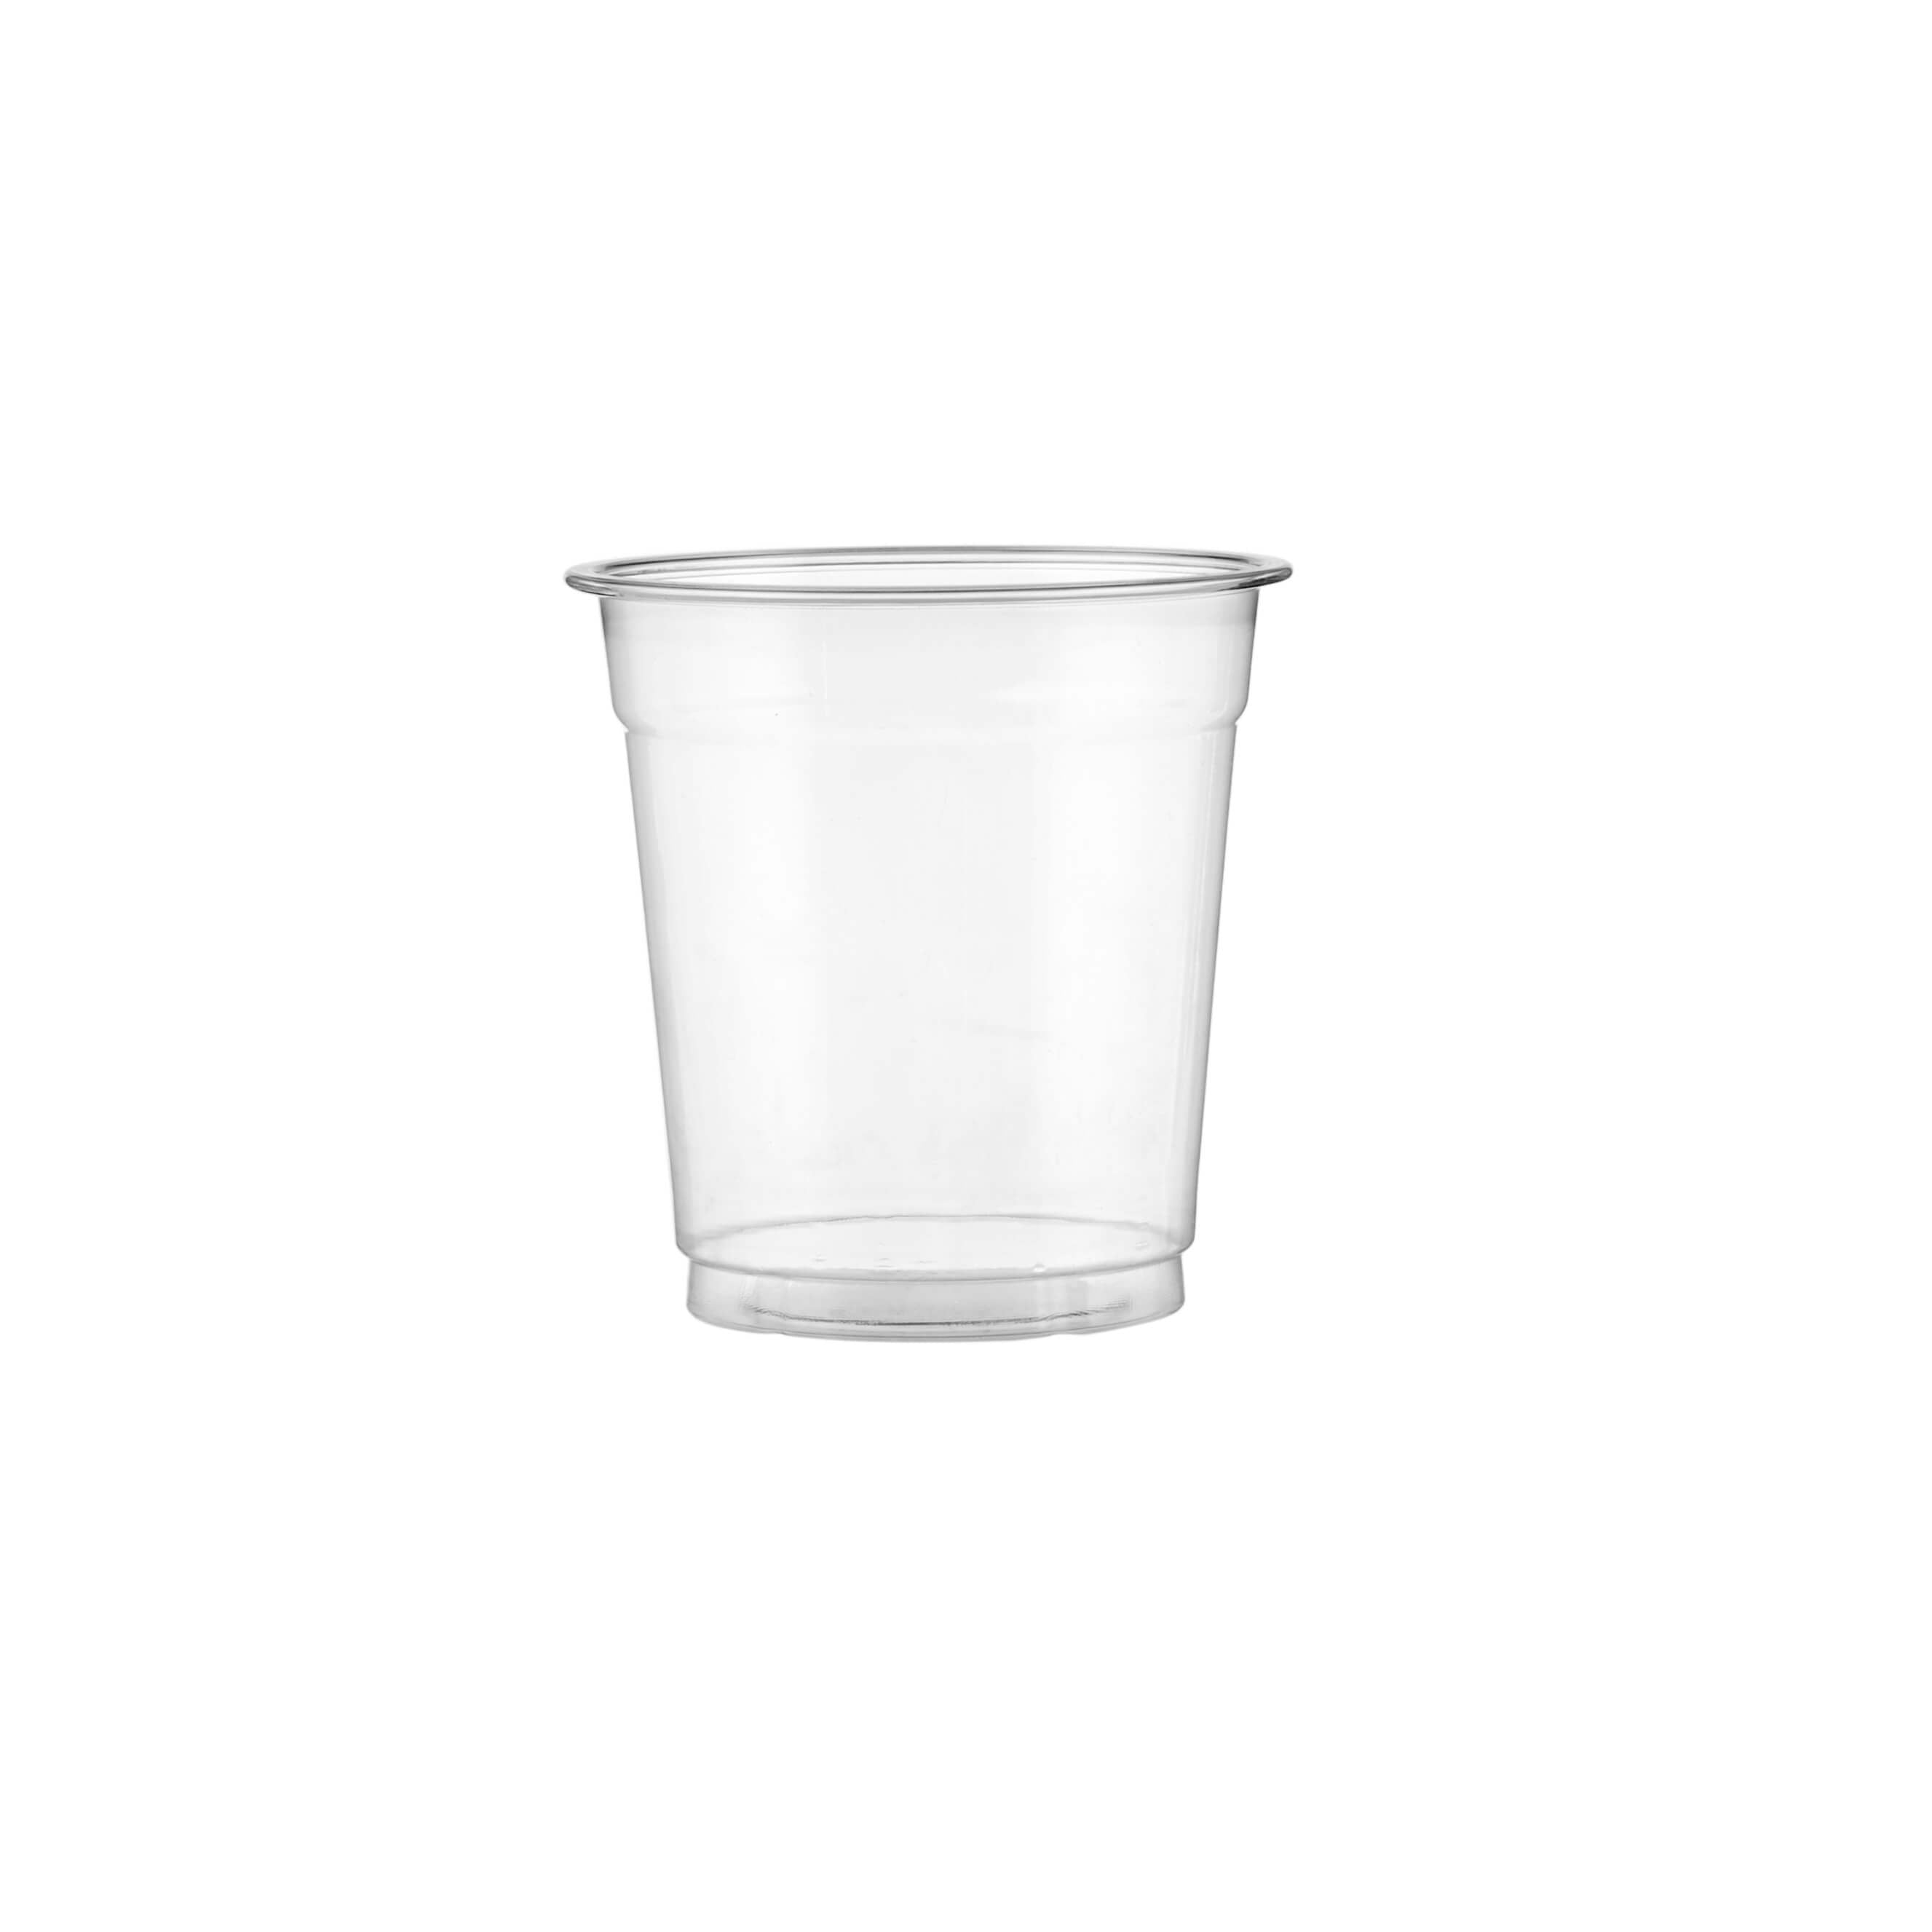 PET Clear Juice Cups - hotpackwebstore.com